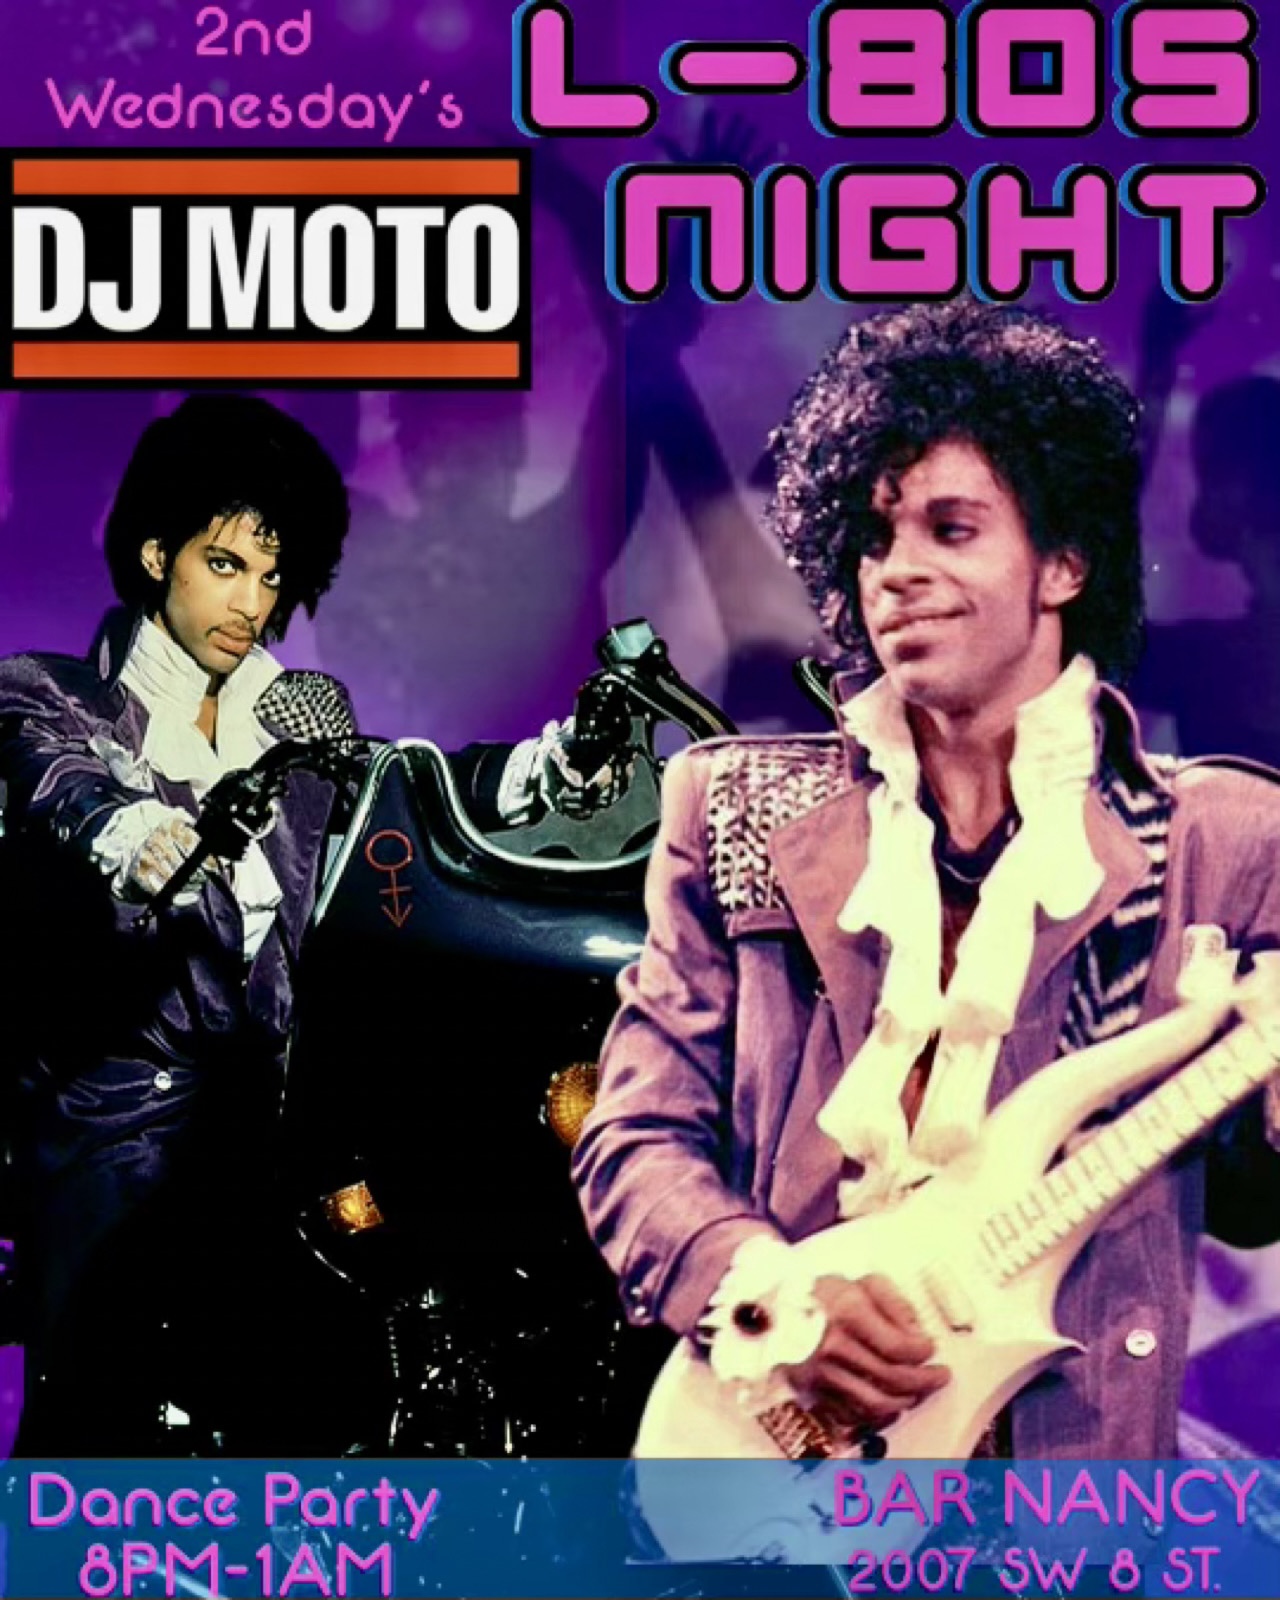 L80’s Night at Bar Nancy with DJ MOTO- 2nd Wednesday's